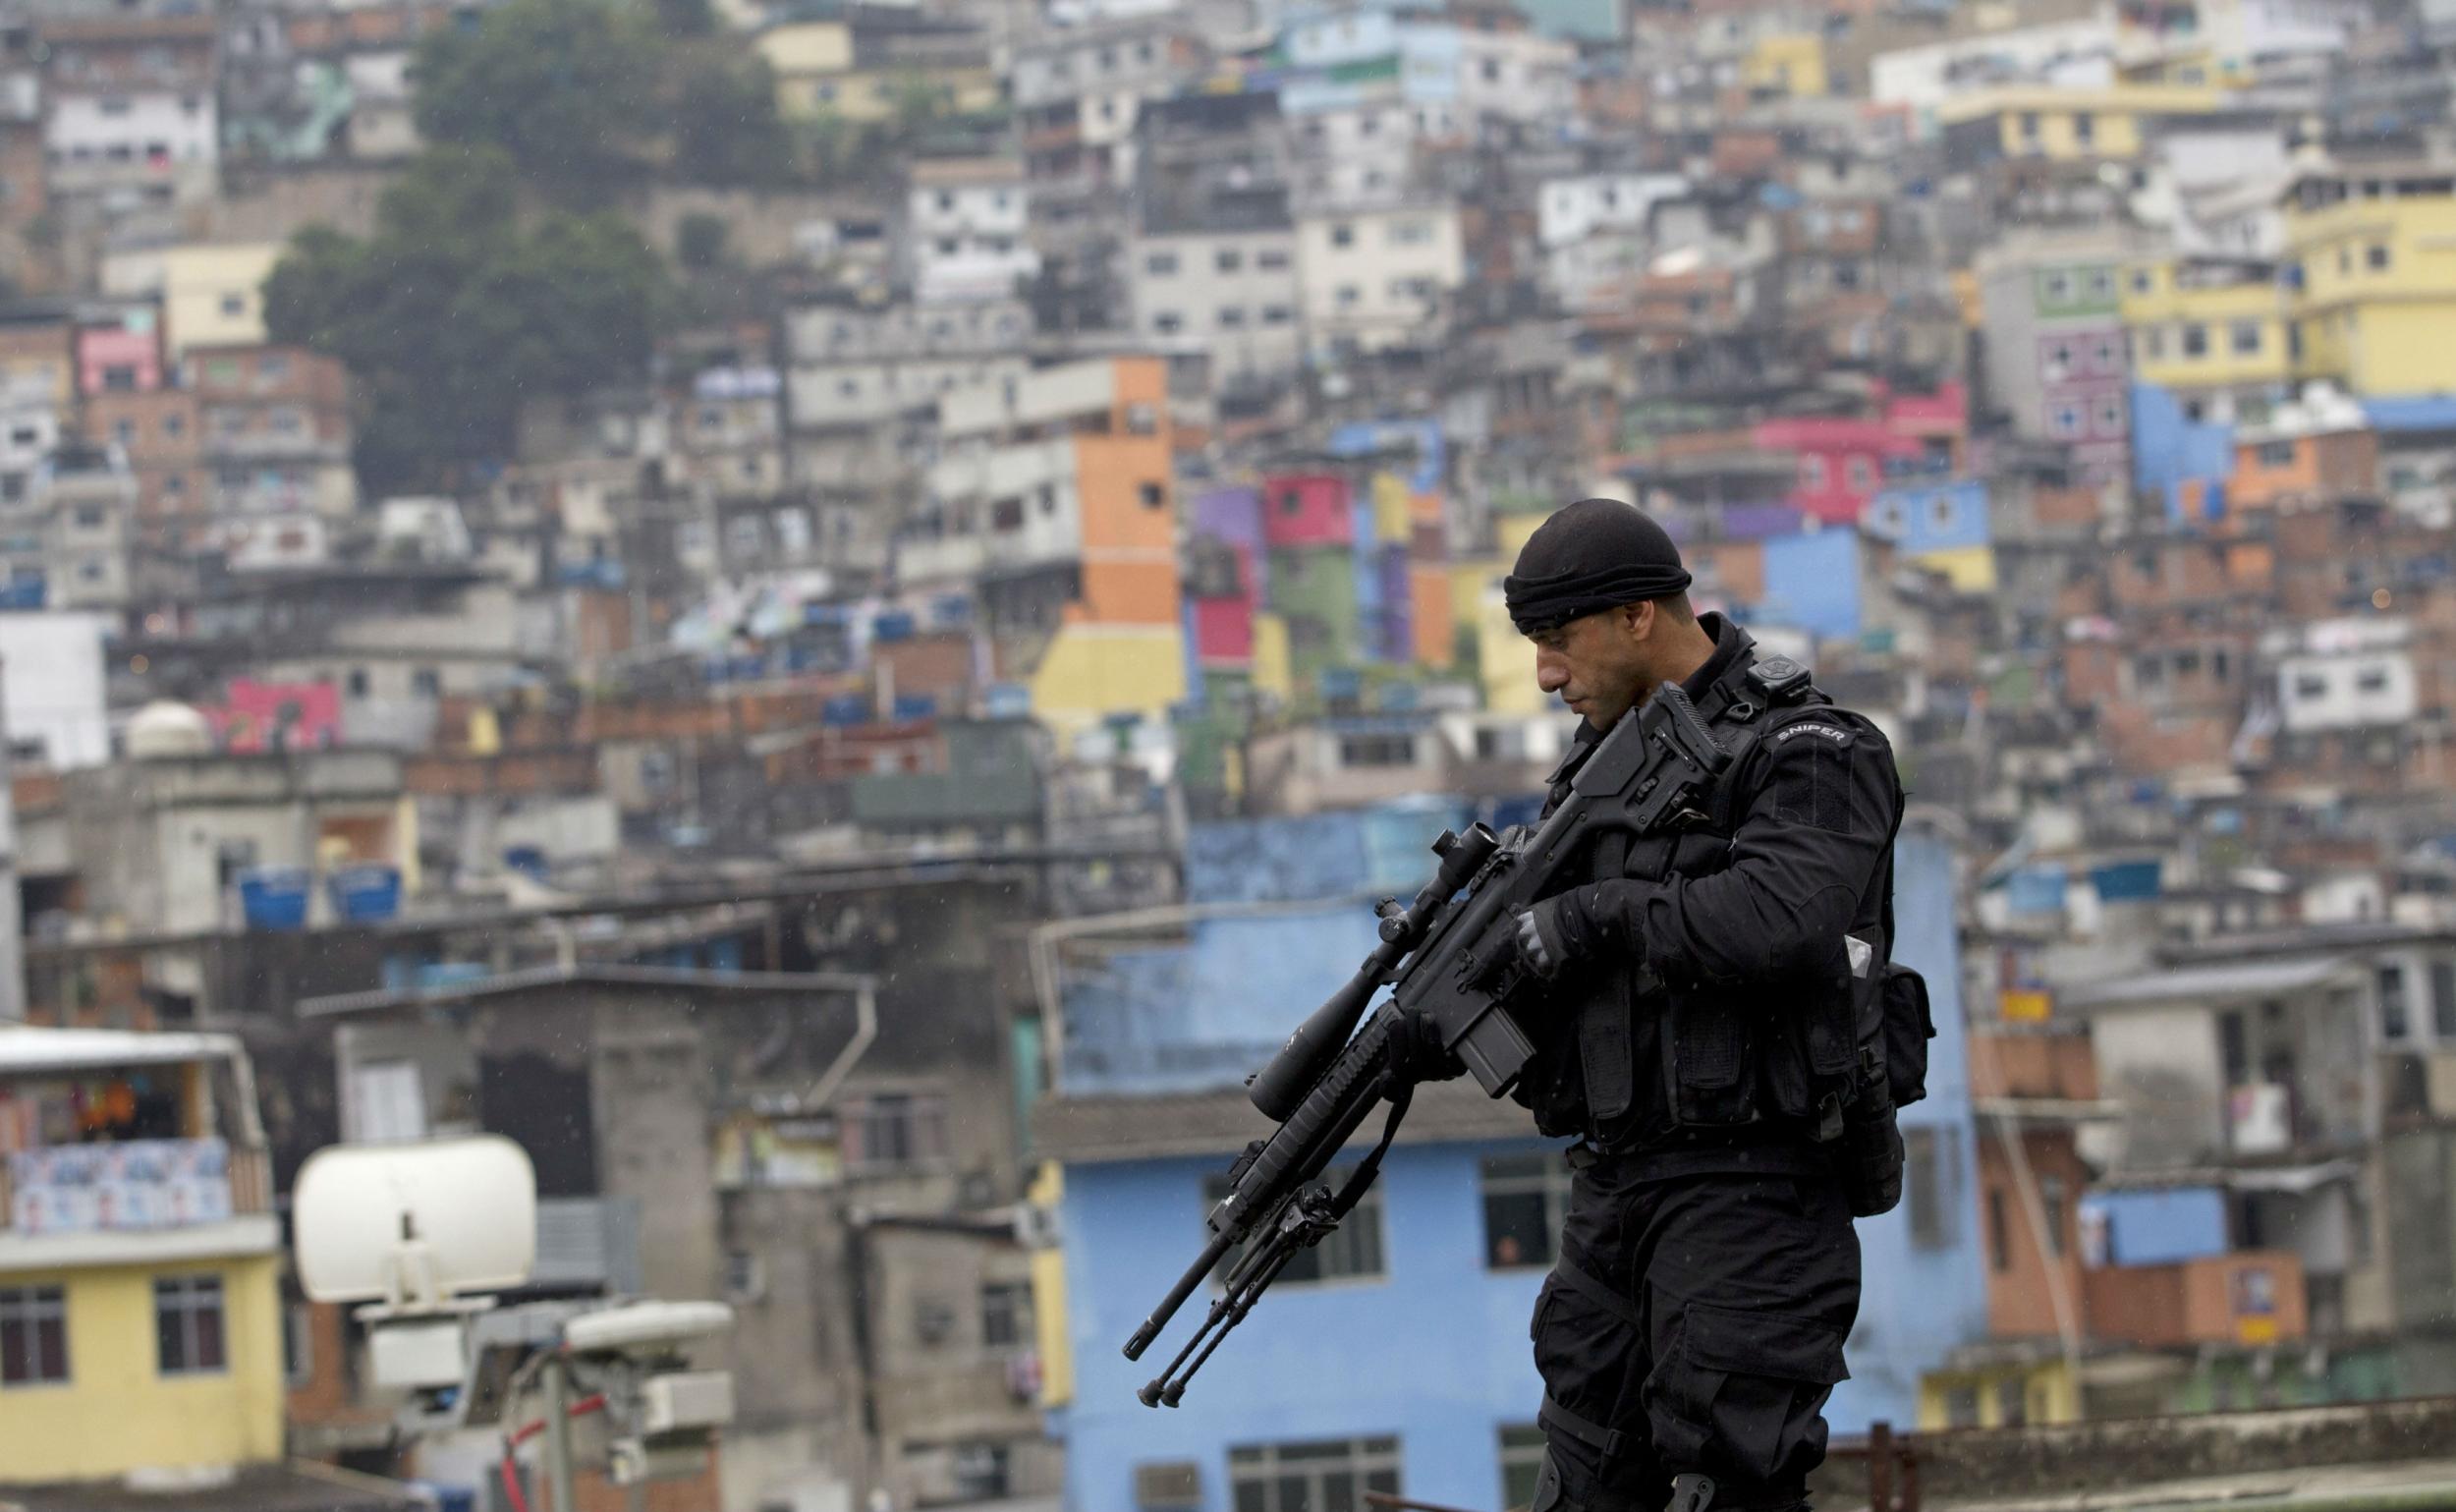 Police operation in a Rio favela